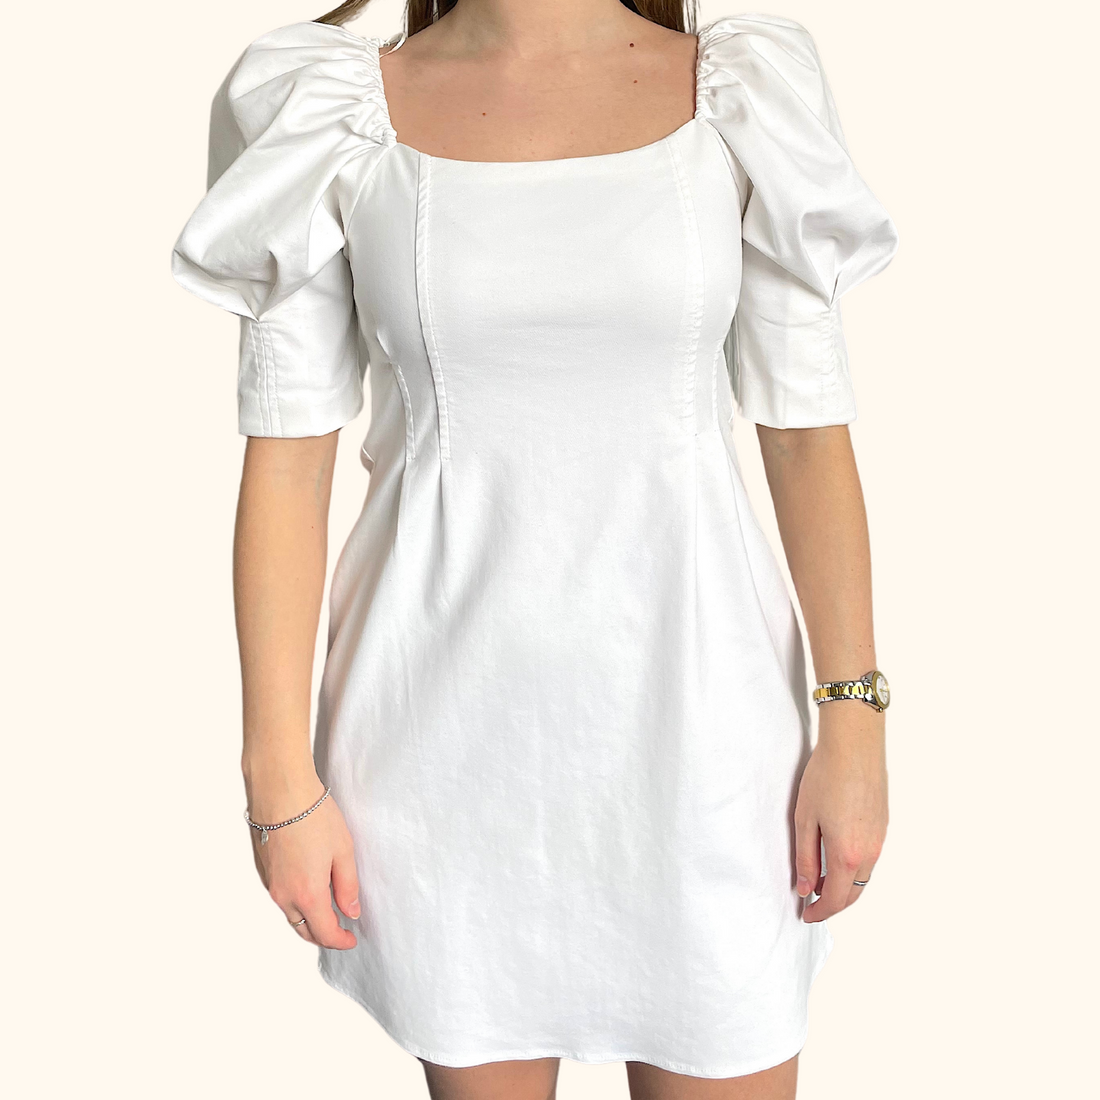 Zara White Denim Puff Sleeve Mini Dress - Size Medium - Zara - Dresses